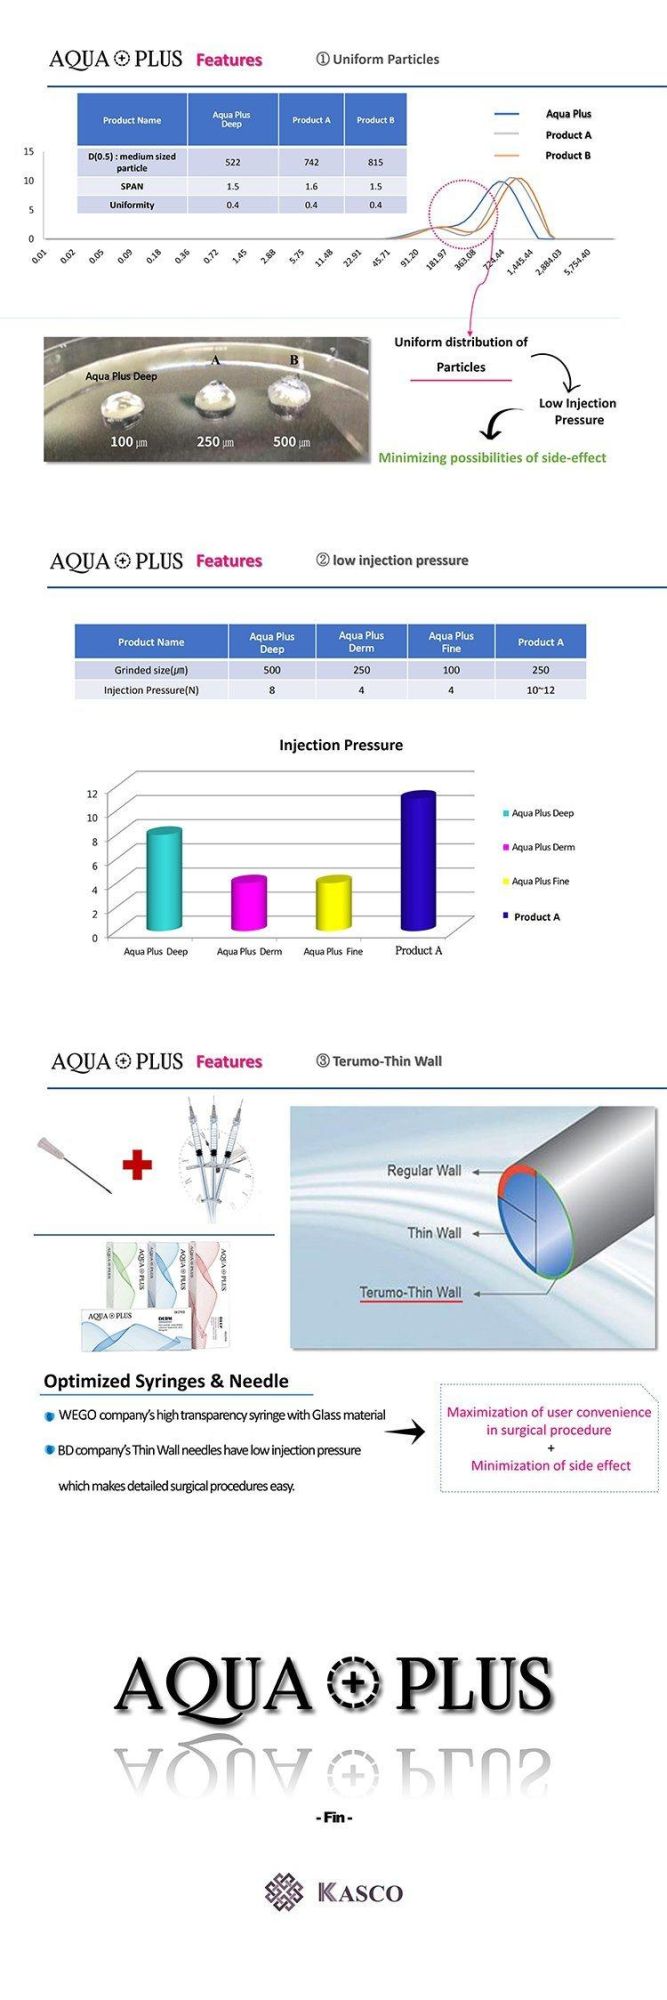 Aqua Plus Hyaluronic Acid Injectable Ha Gel Syringe Facial Dermal Fillers 2.0ml Injection